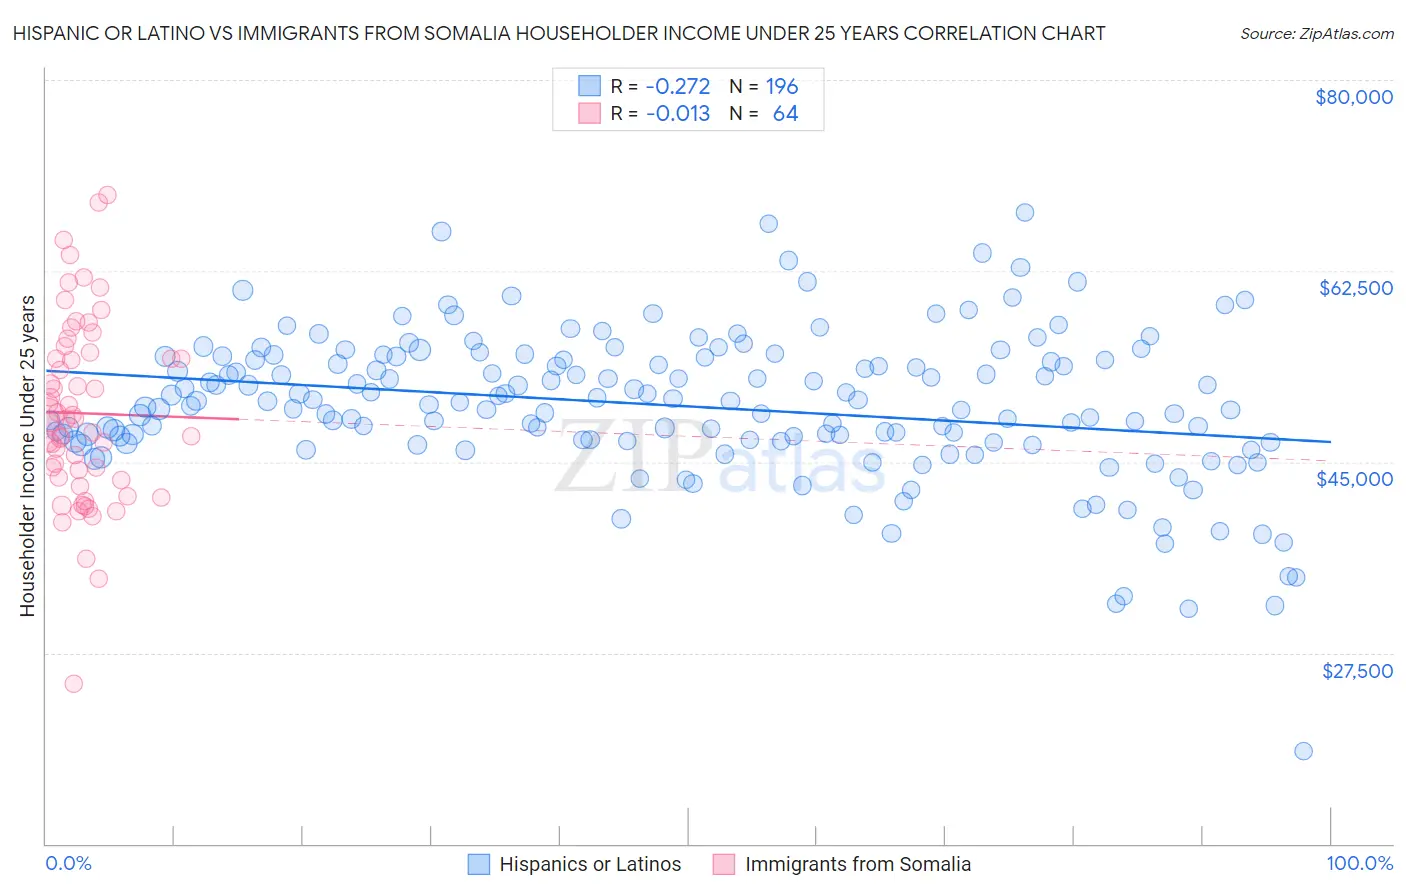 Hispanic or Latino vs Immigrants from Somalia Householder Income Under 25 years